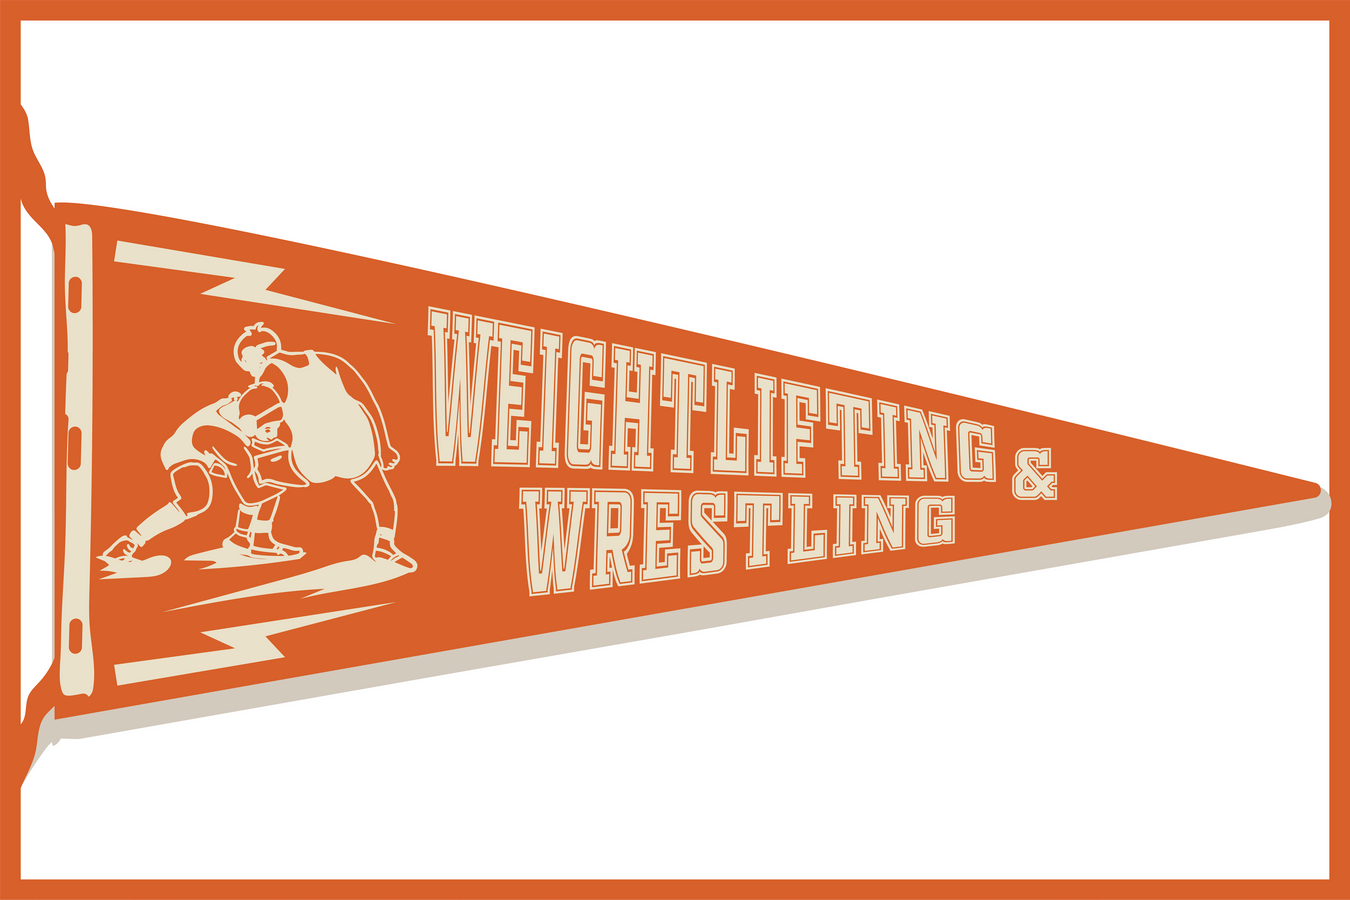 Weightlifting & Wrestling